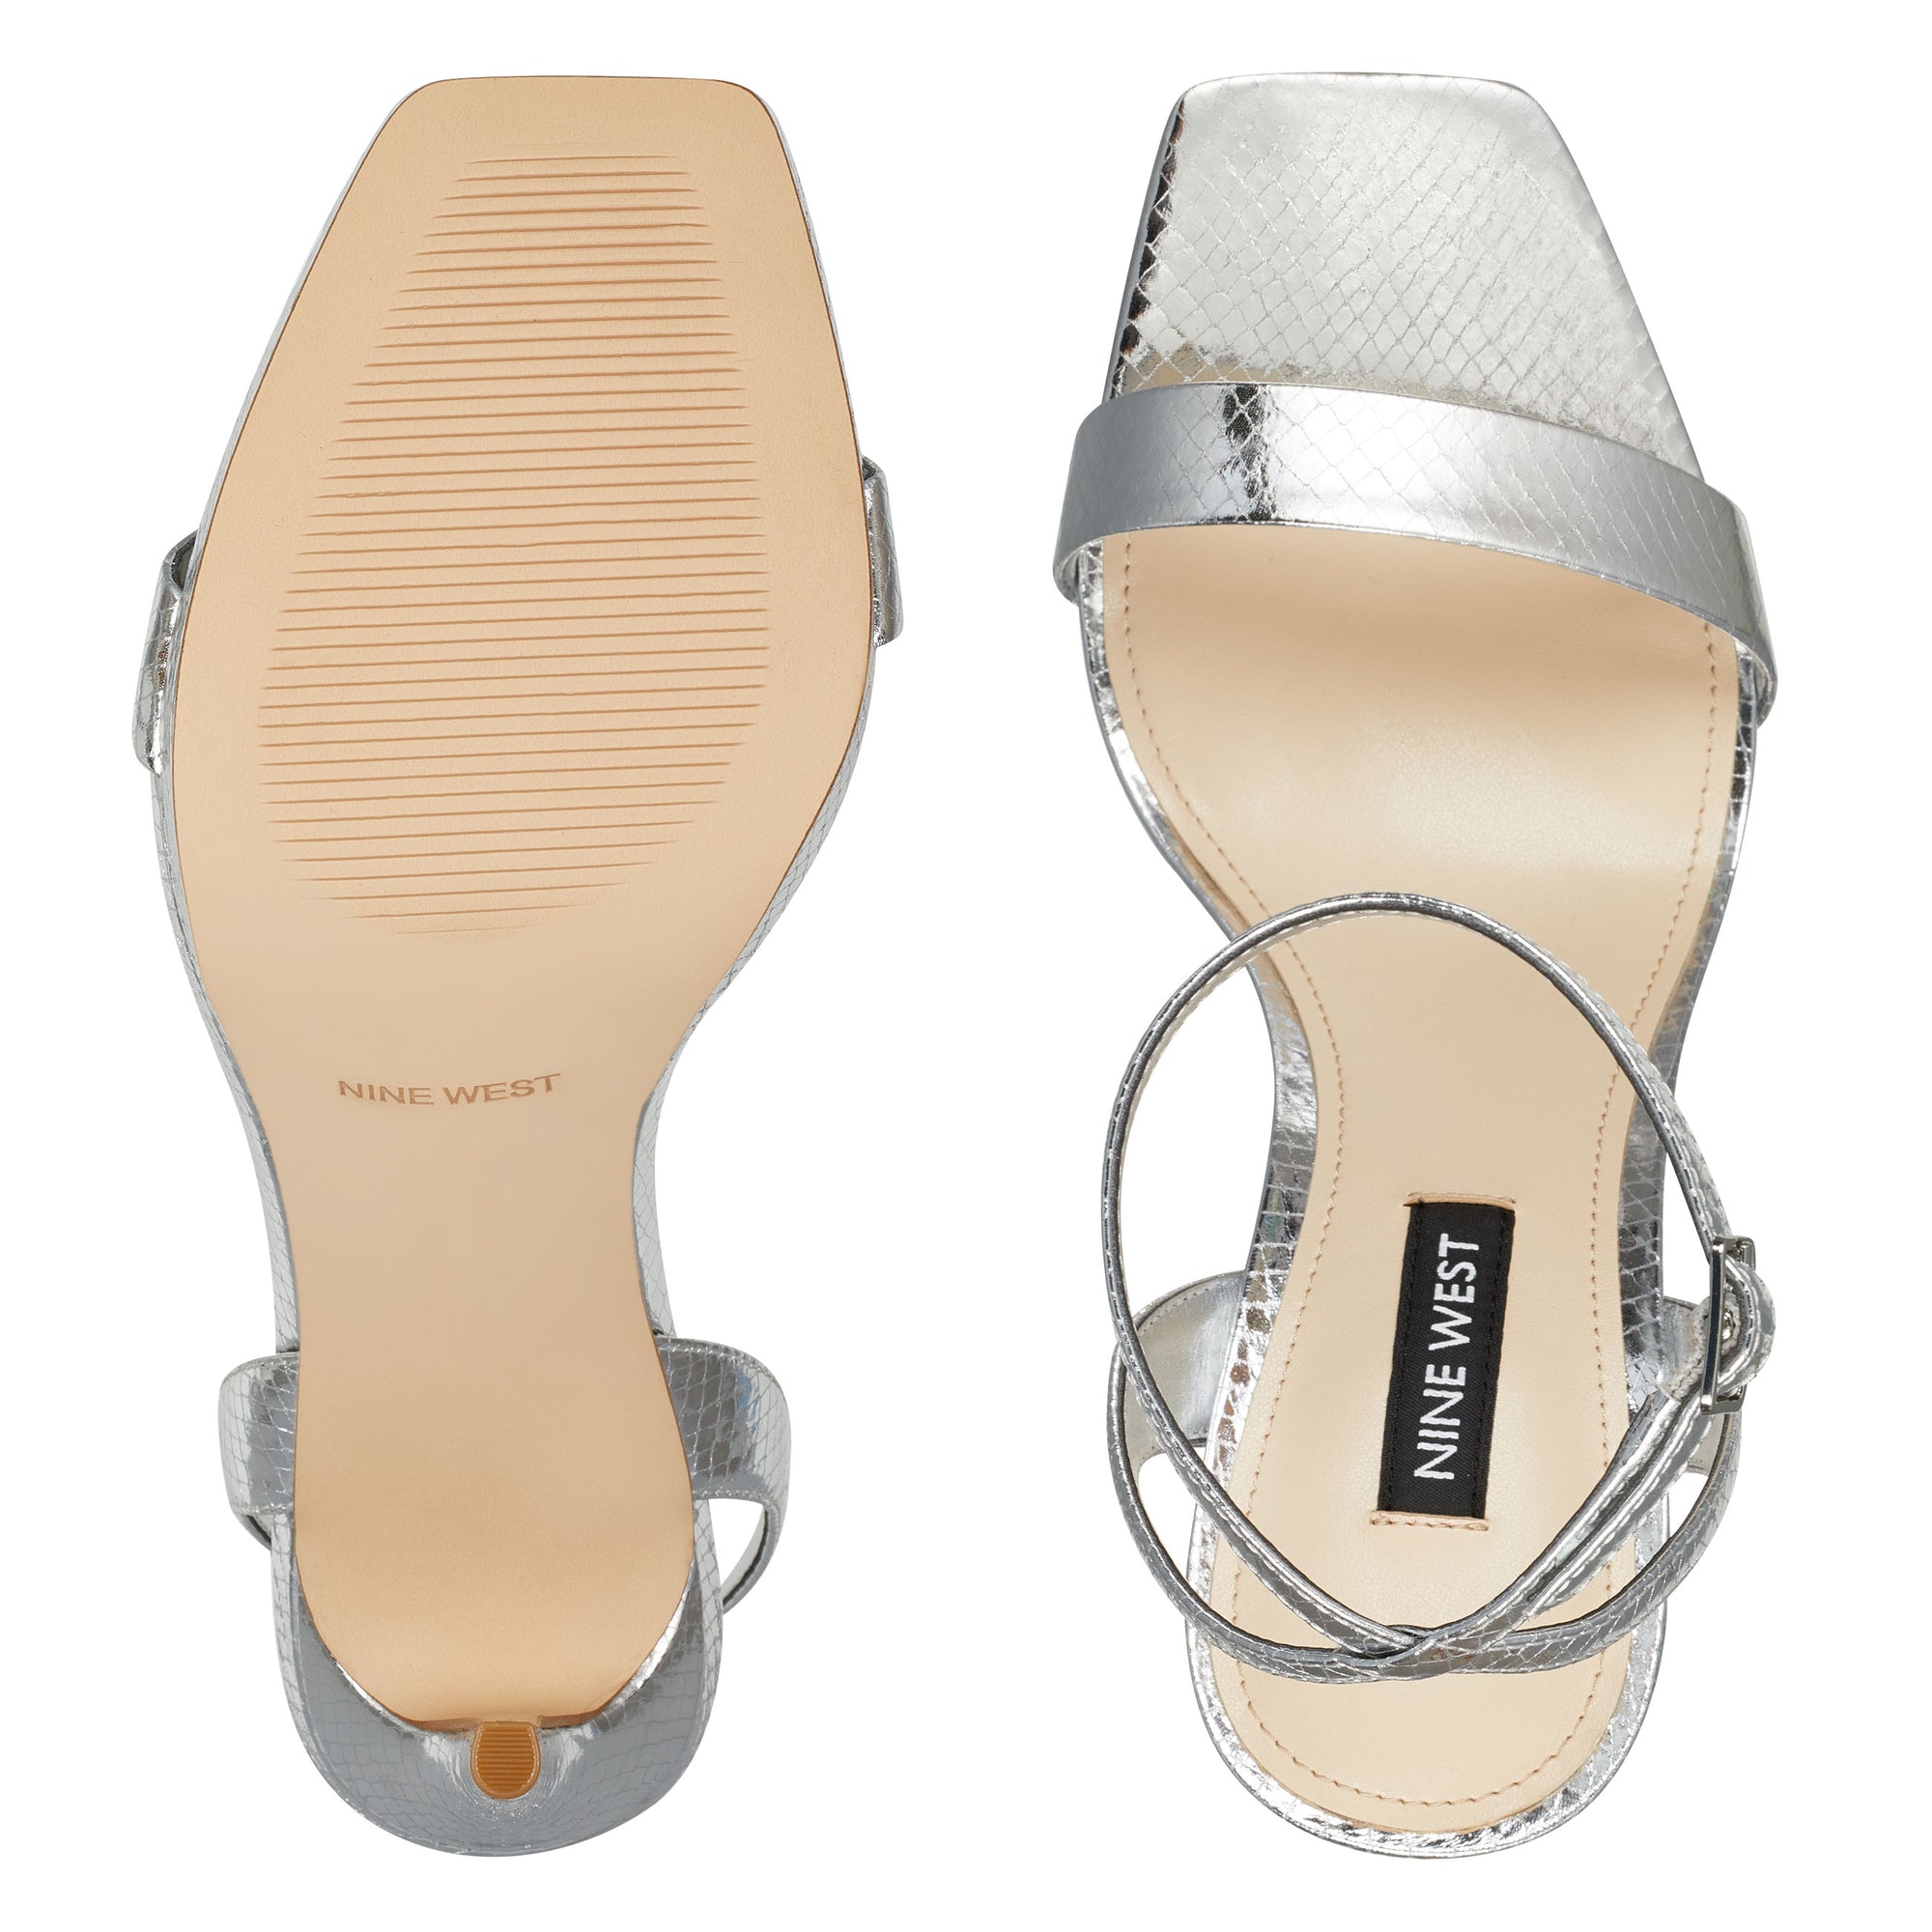 Buy > nine west zadie ankle strap sandals > in stock